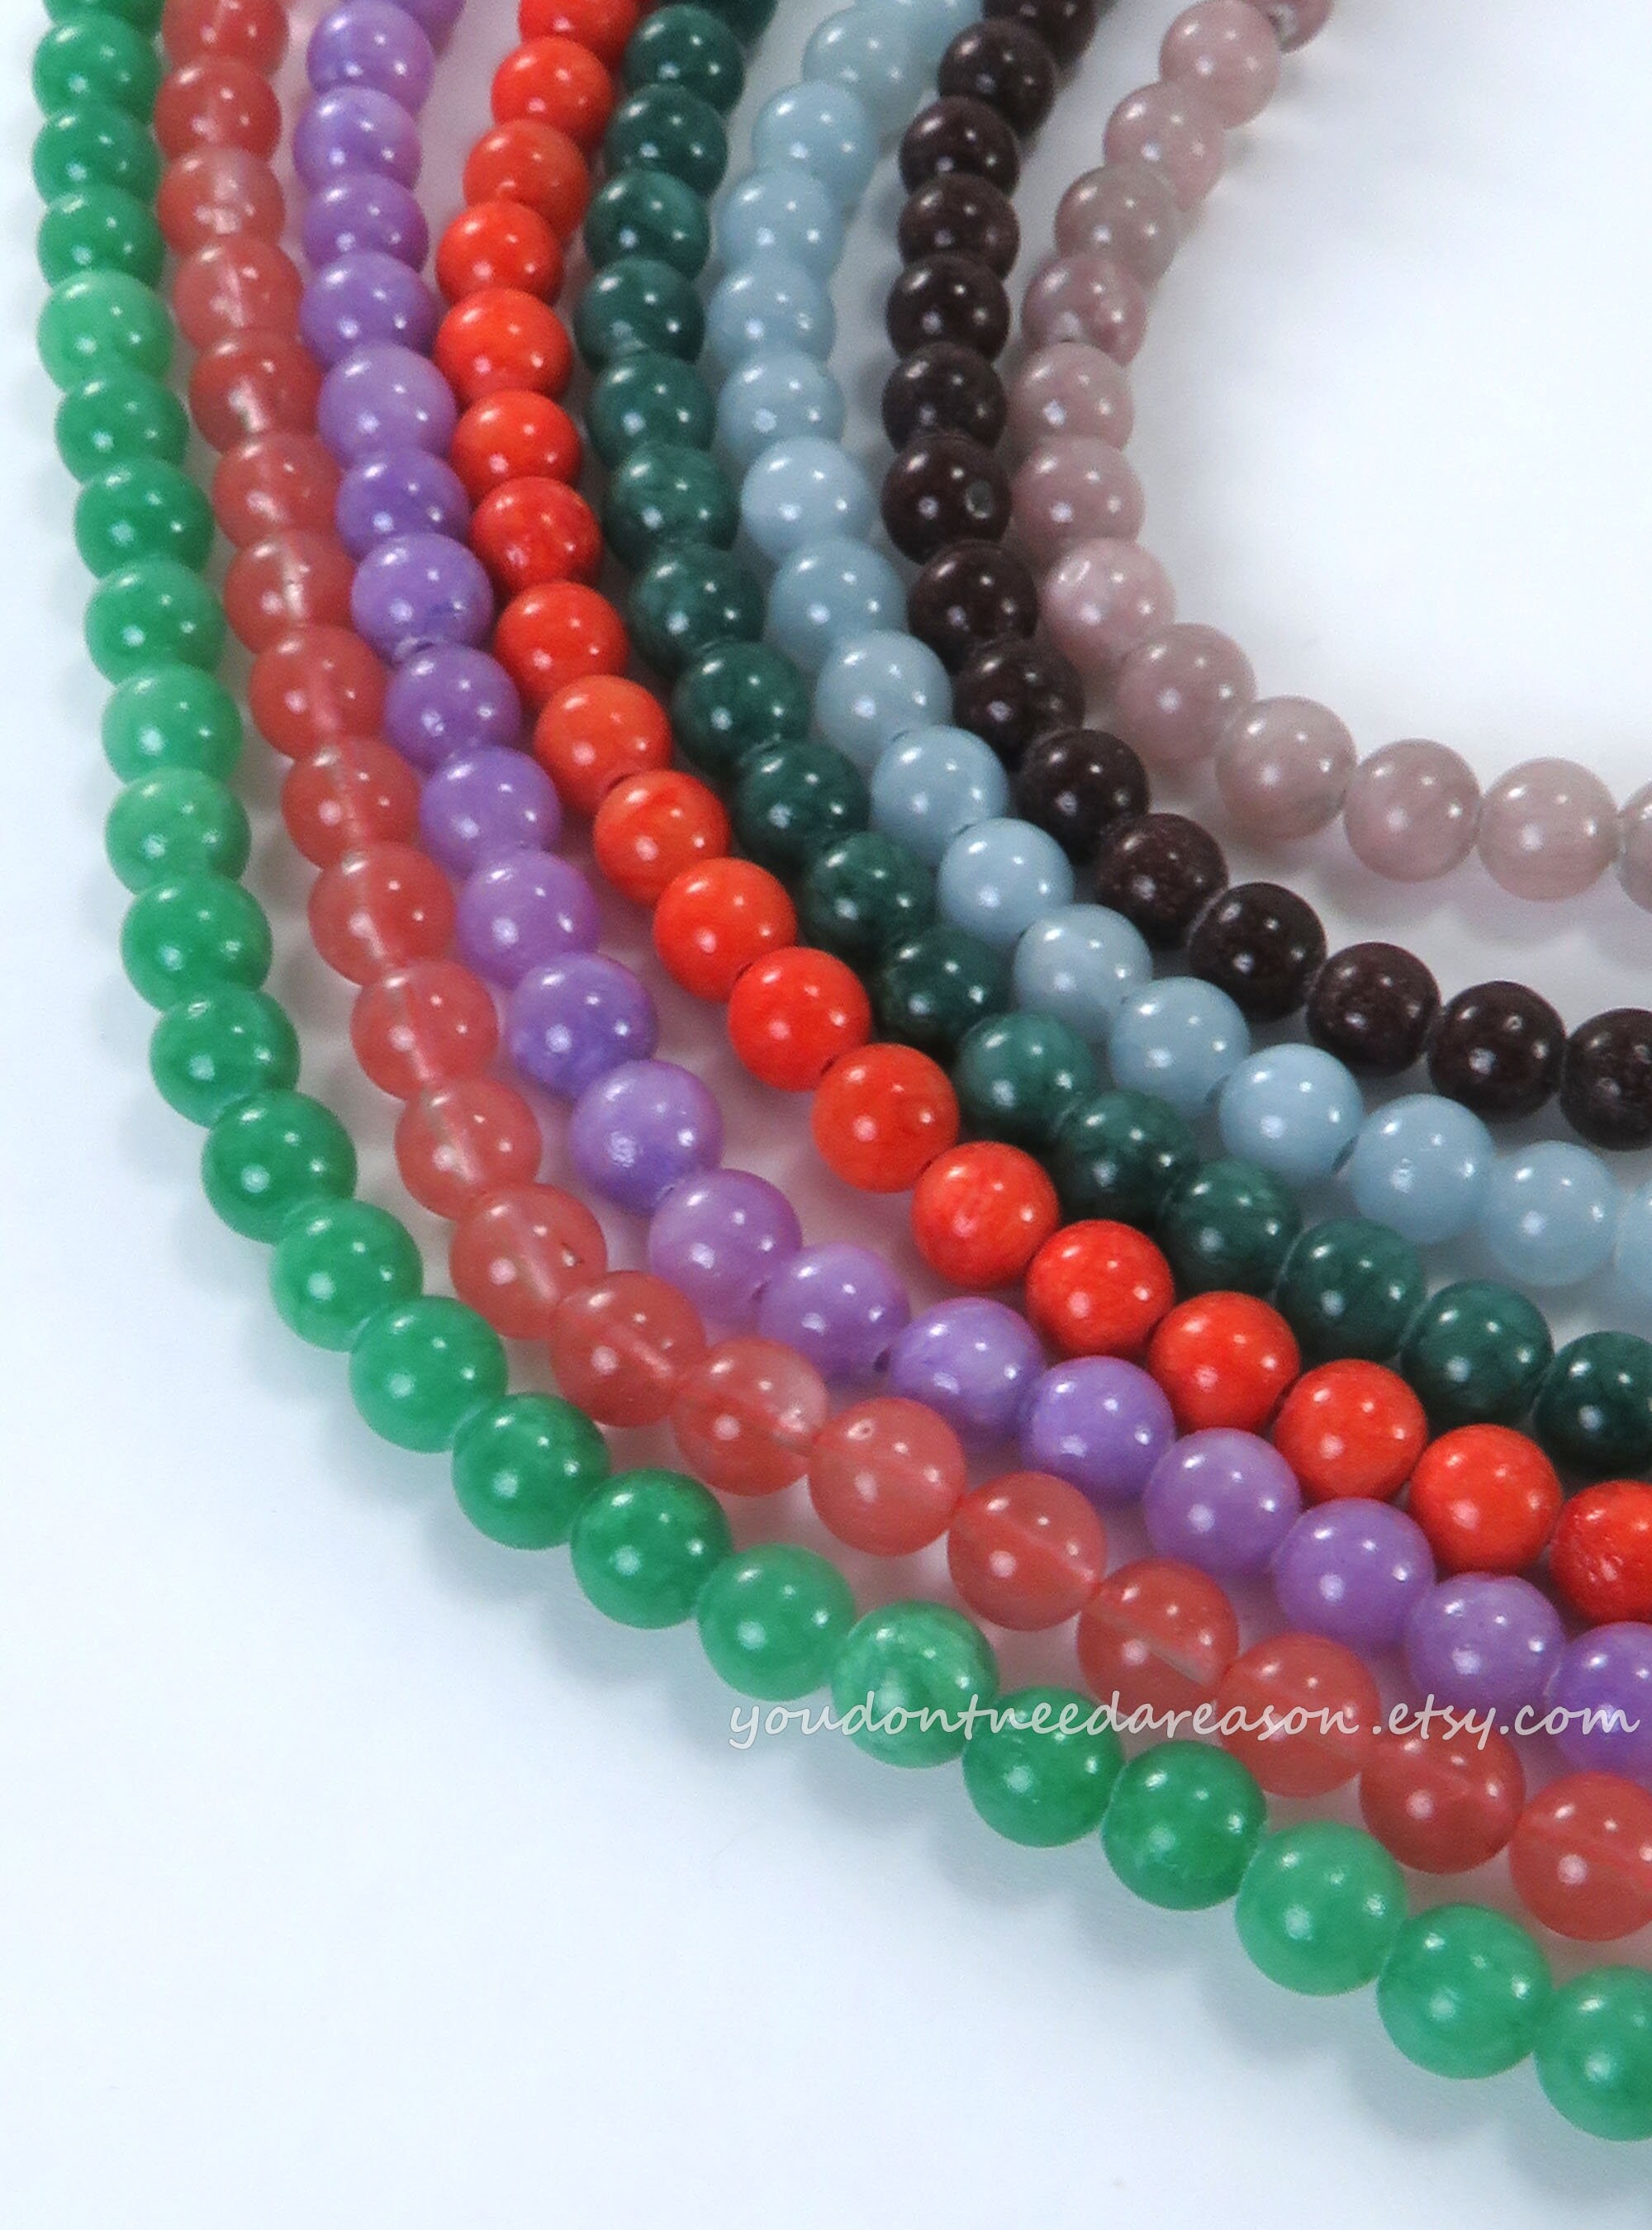 6mm Smooth Round Jade Gemstone Beads Colorful Jade Beads 